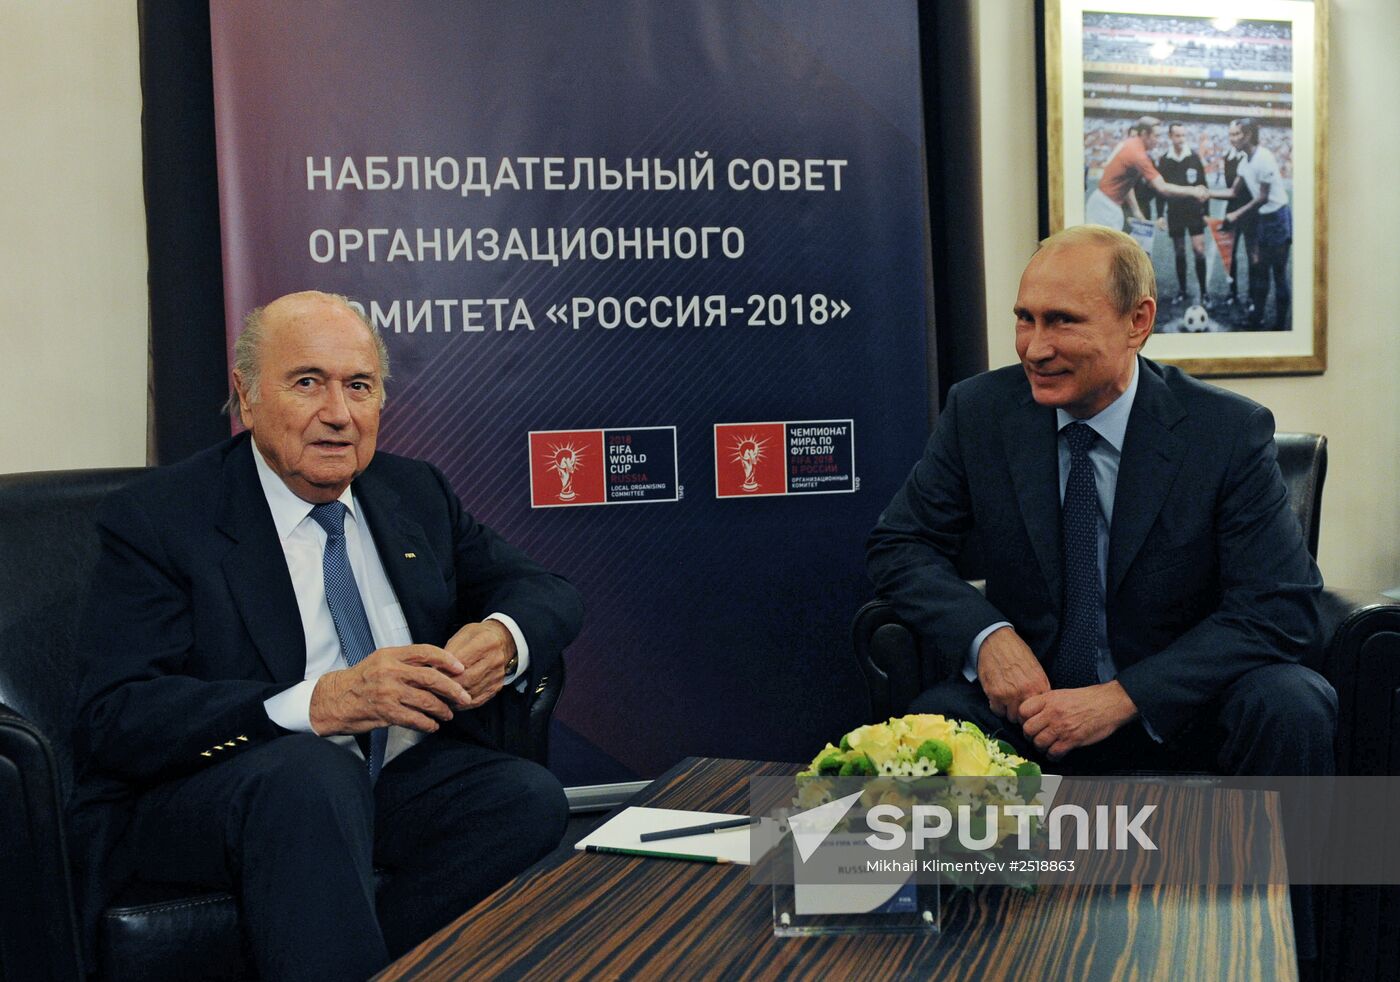 Vladimir Putin inspects progress of Luzhniki Sports Arena reconstruction